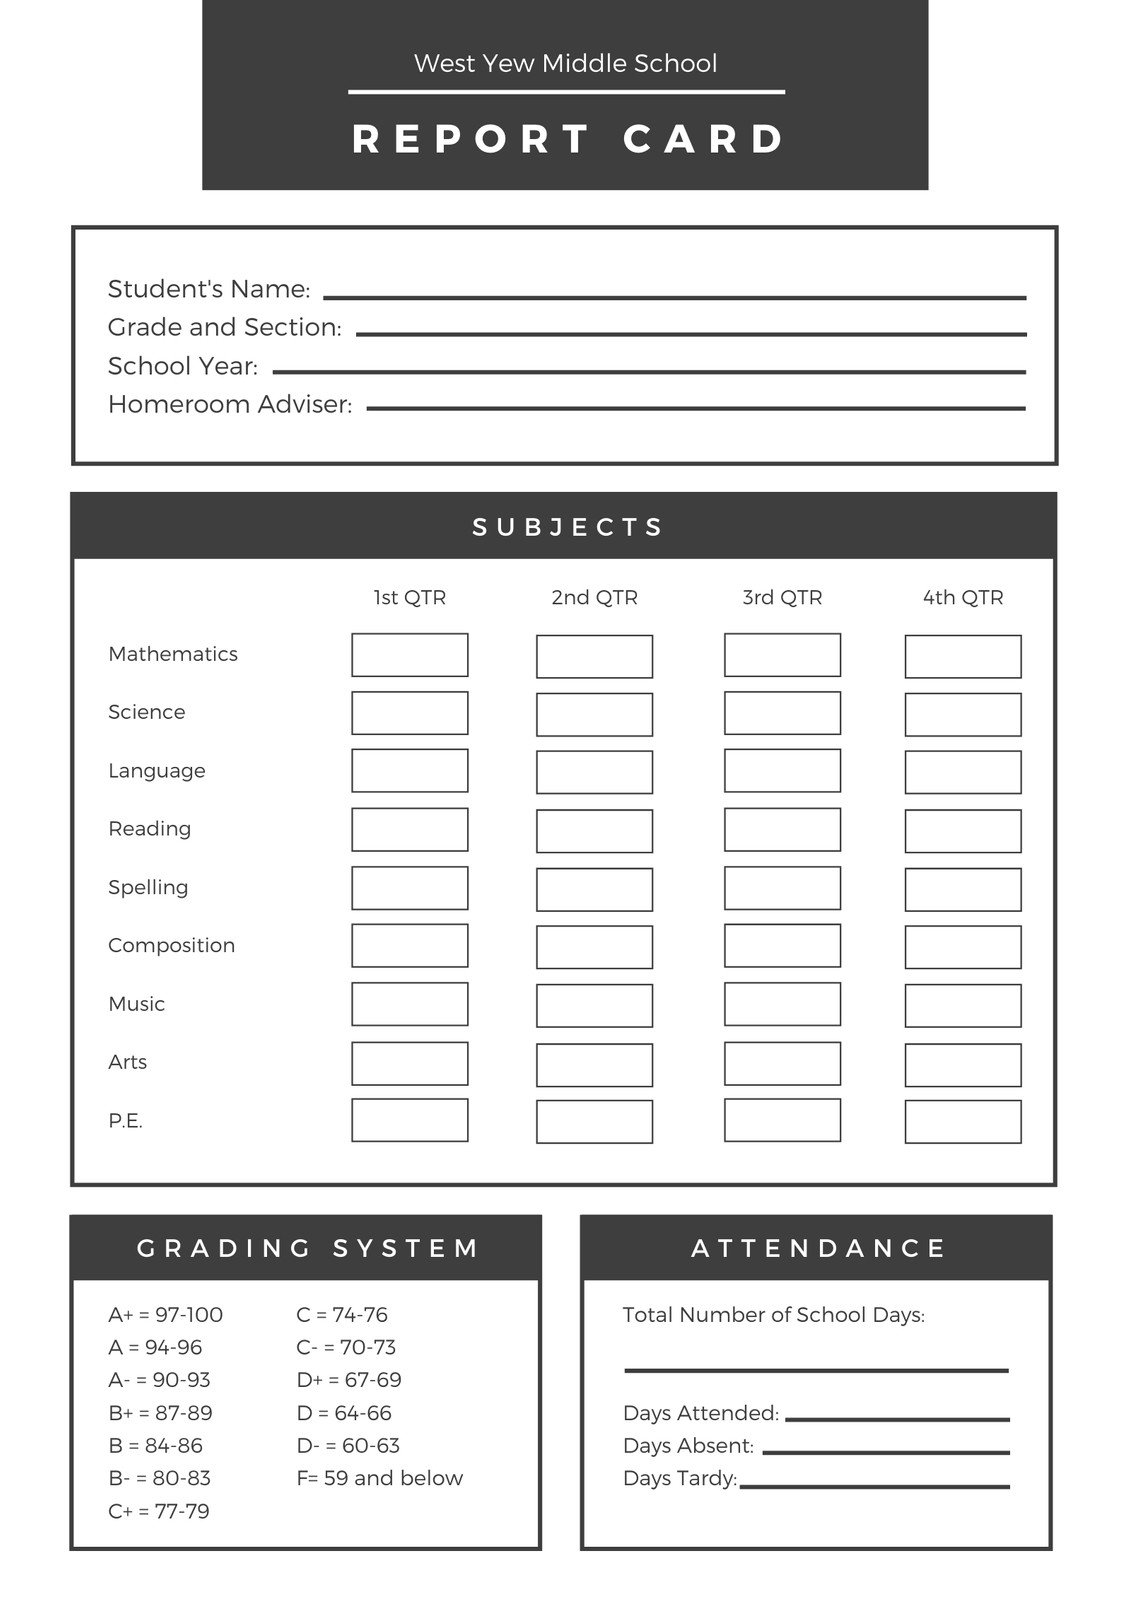 Free, printable, customizable report card templates Canva